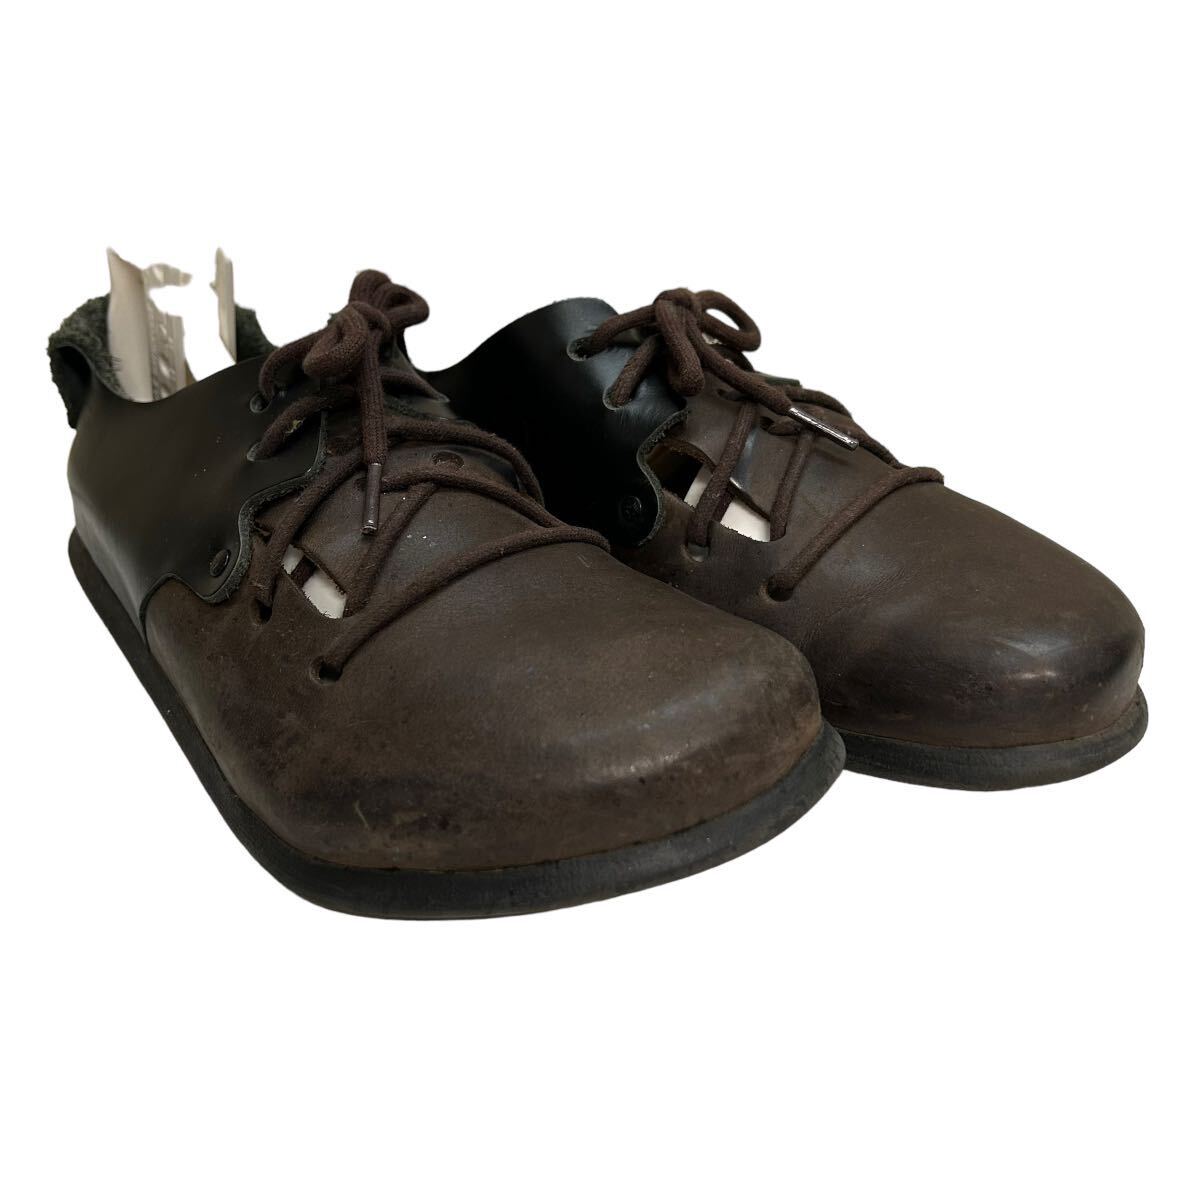 BD127 BIRKENSTOCK MONTANA Birkenstock montana men's walking shoes sandals 41 approximately 26.5cm Brown black Germany made 